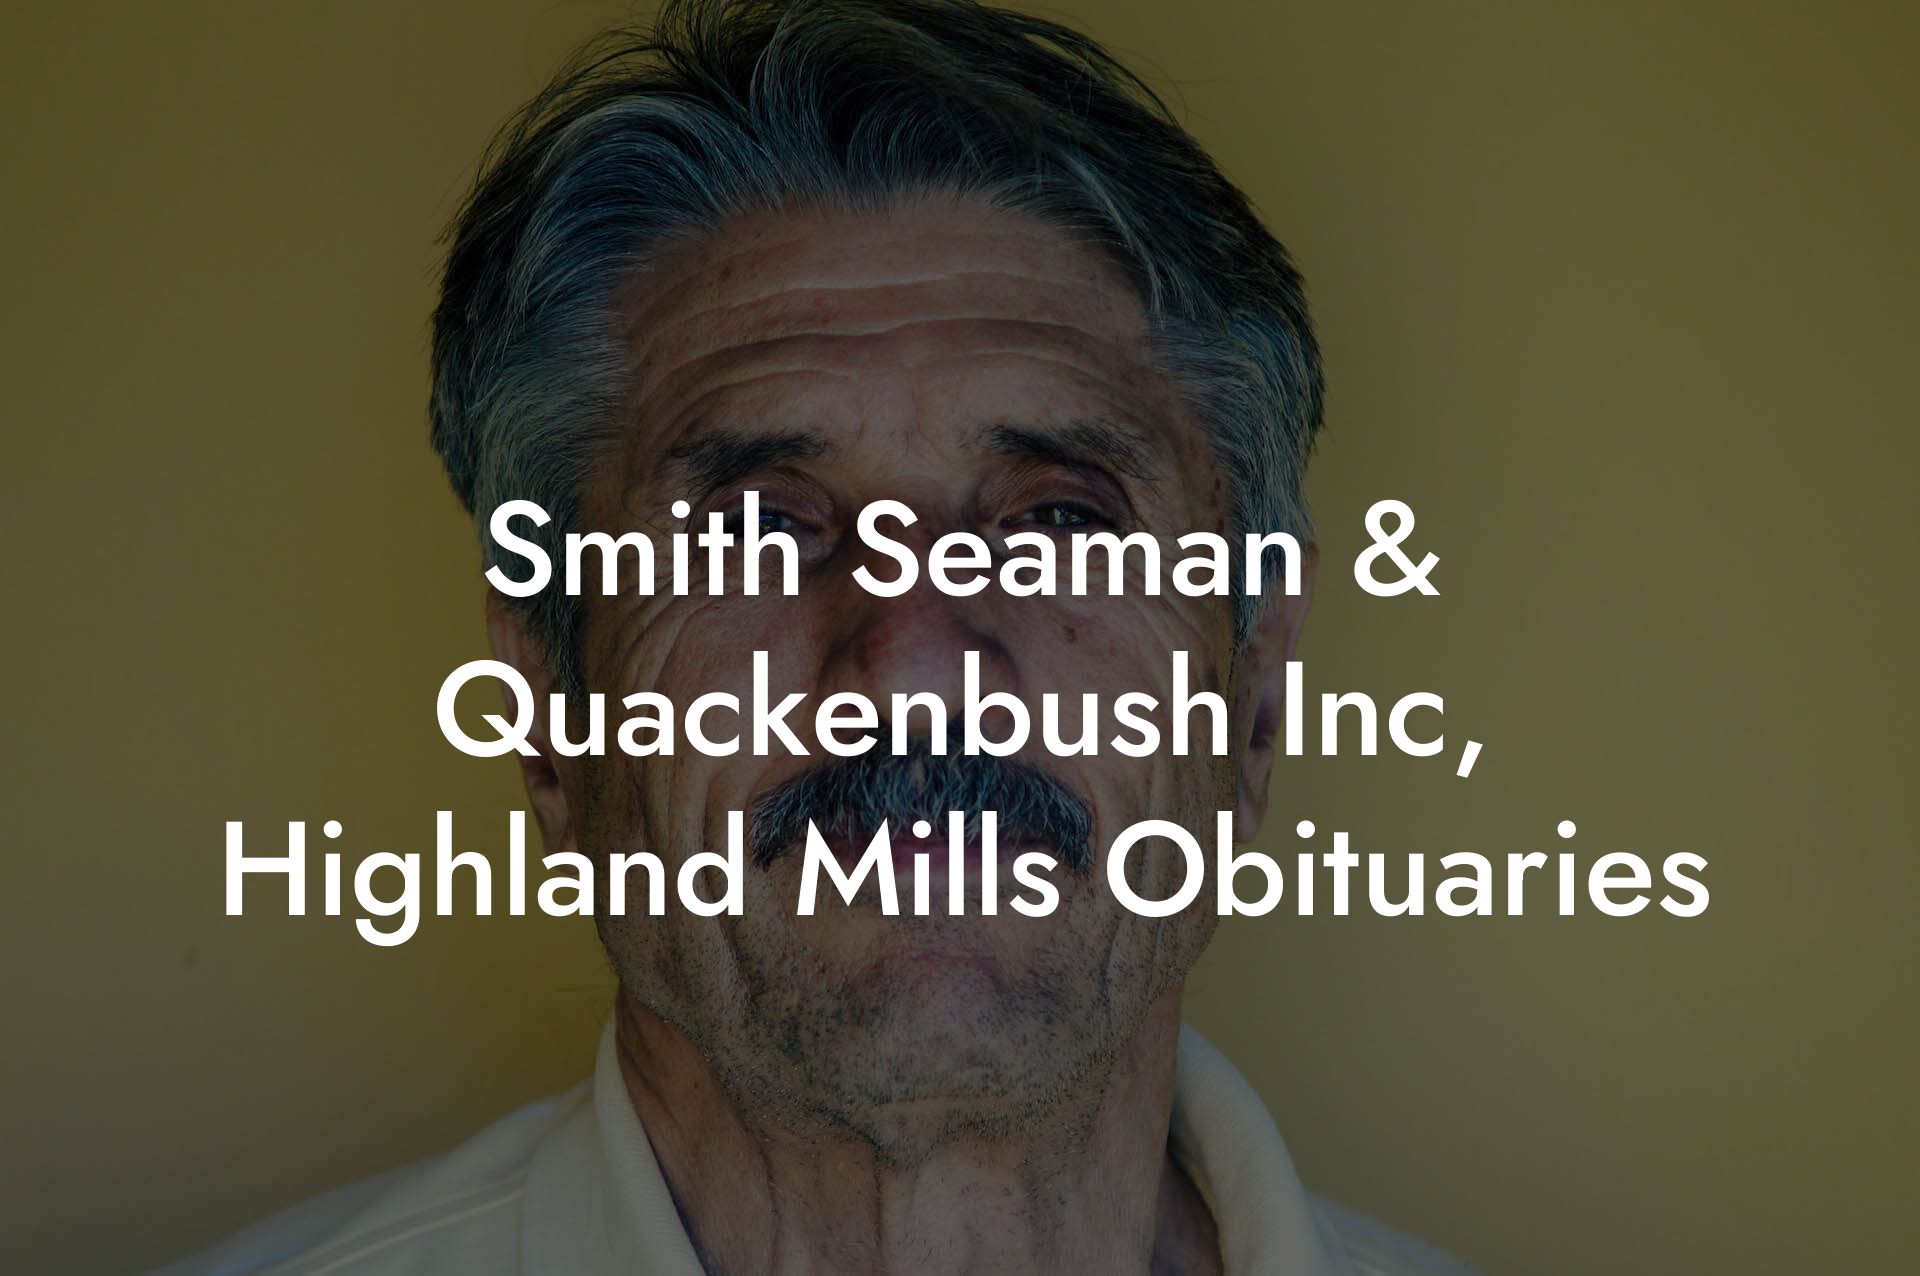 Smith Seaman & Quackenbush Inc, Highland Mills Obituaries